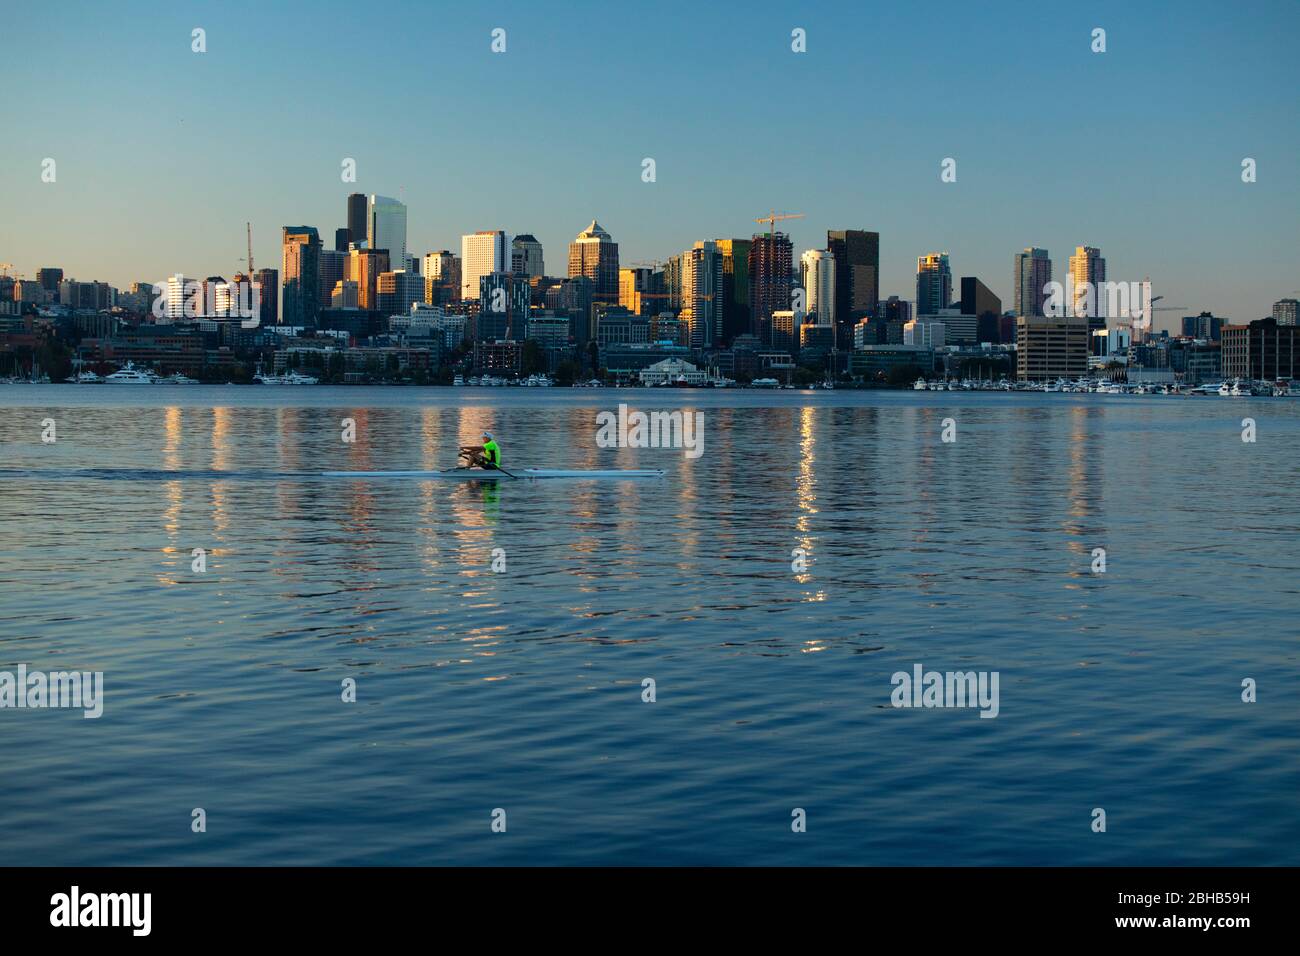 Person kayaking at sunset with city skyline in background, Seattle, Washington, USA Stock Photo